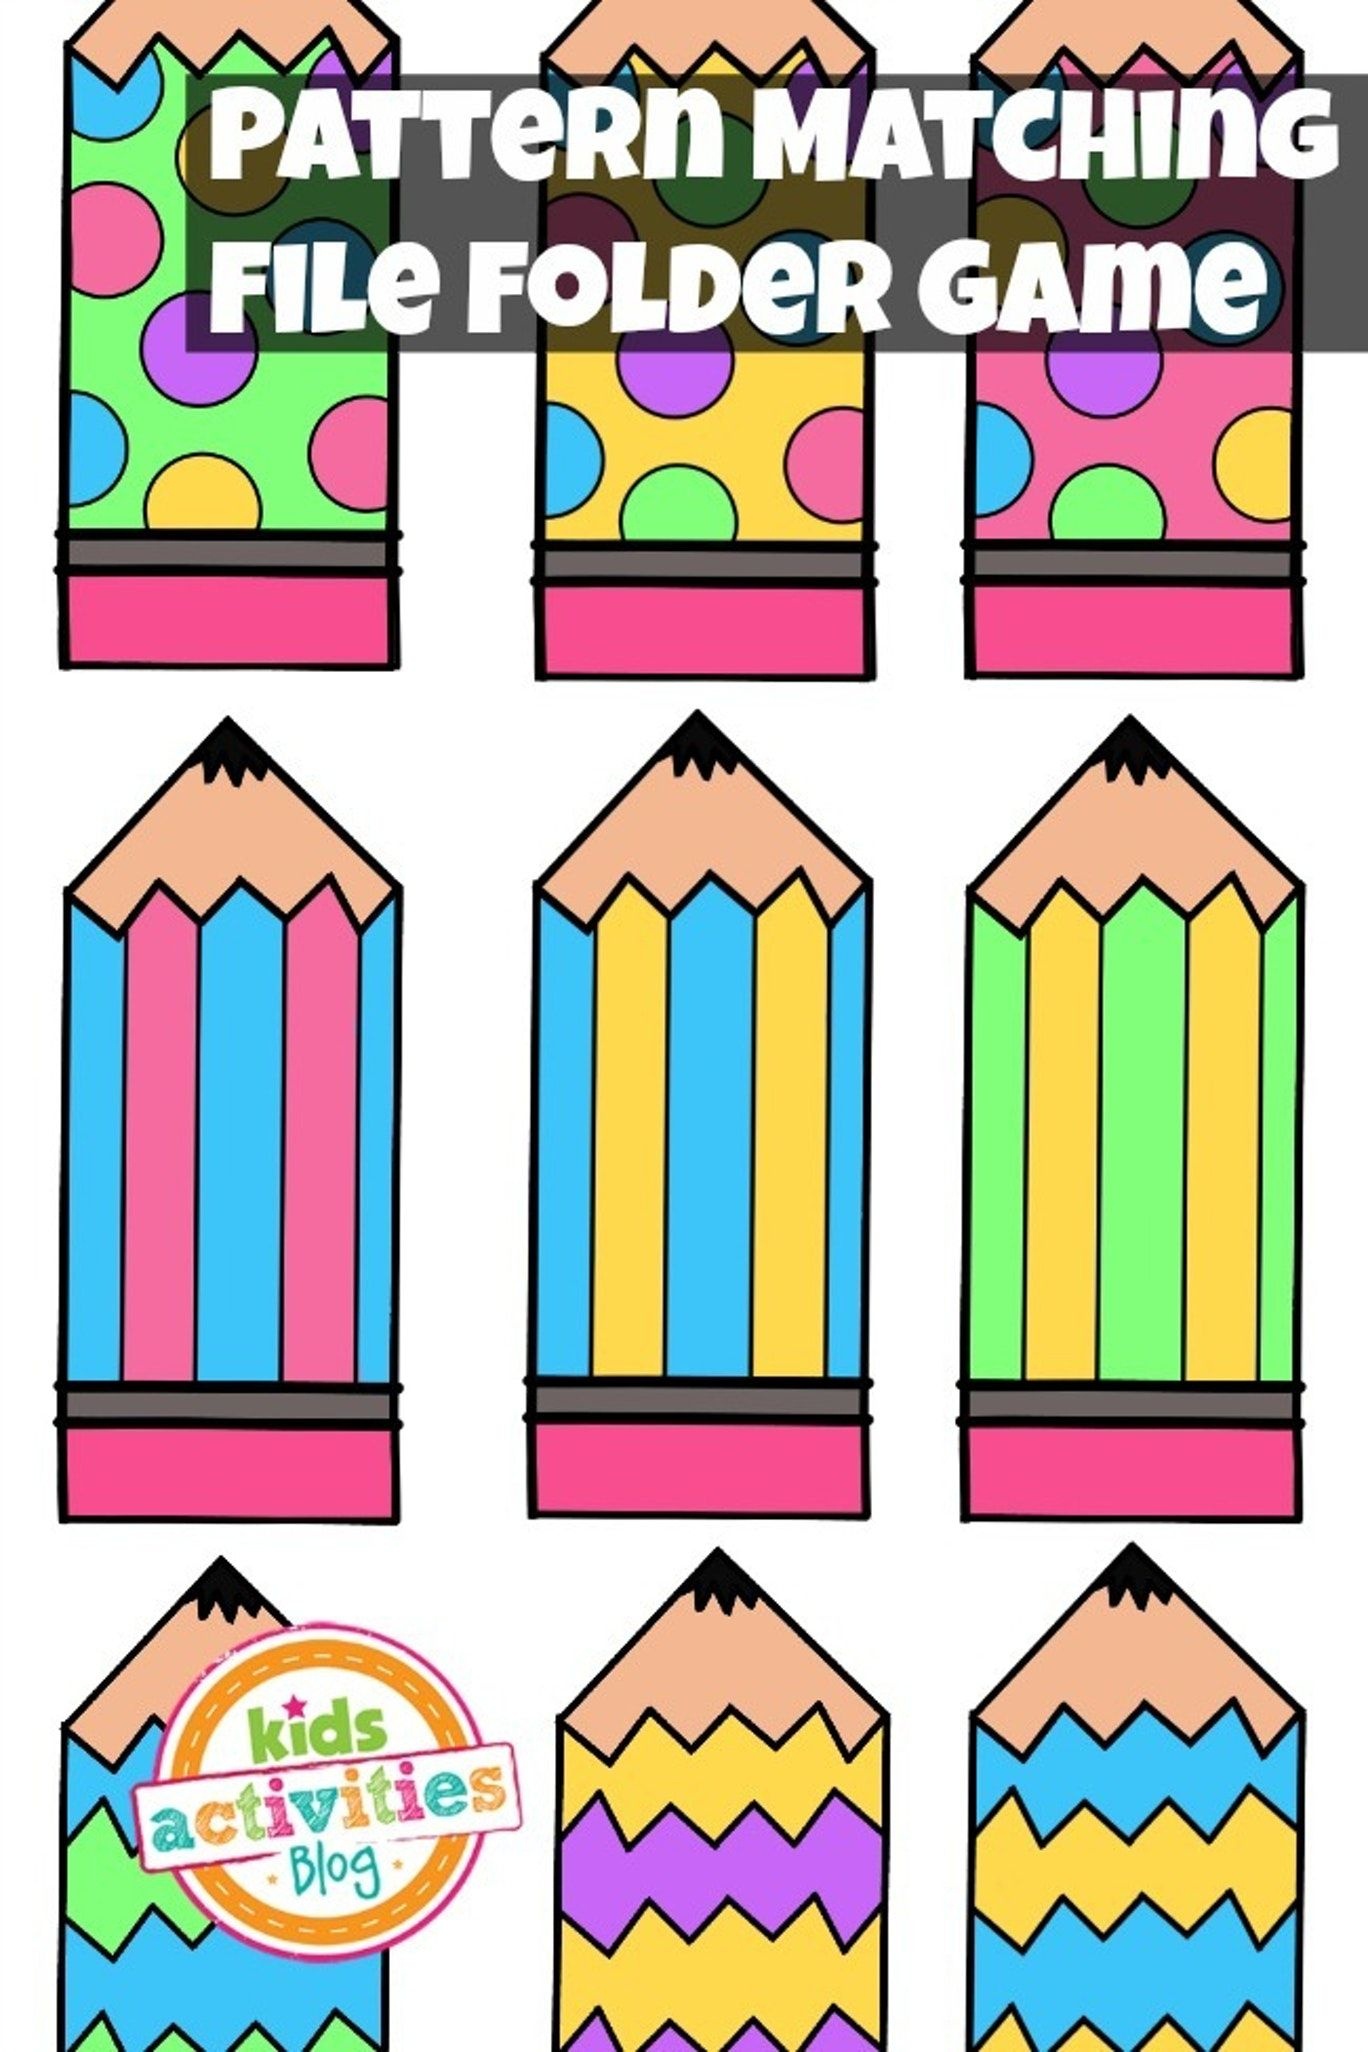 Pattern Matching Free Printable File Folder Game For Preschoolers - Free Printable File Folder Games For Preschool